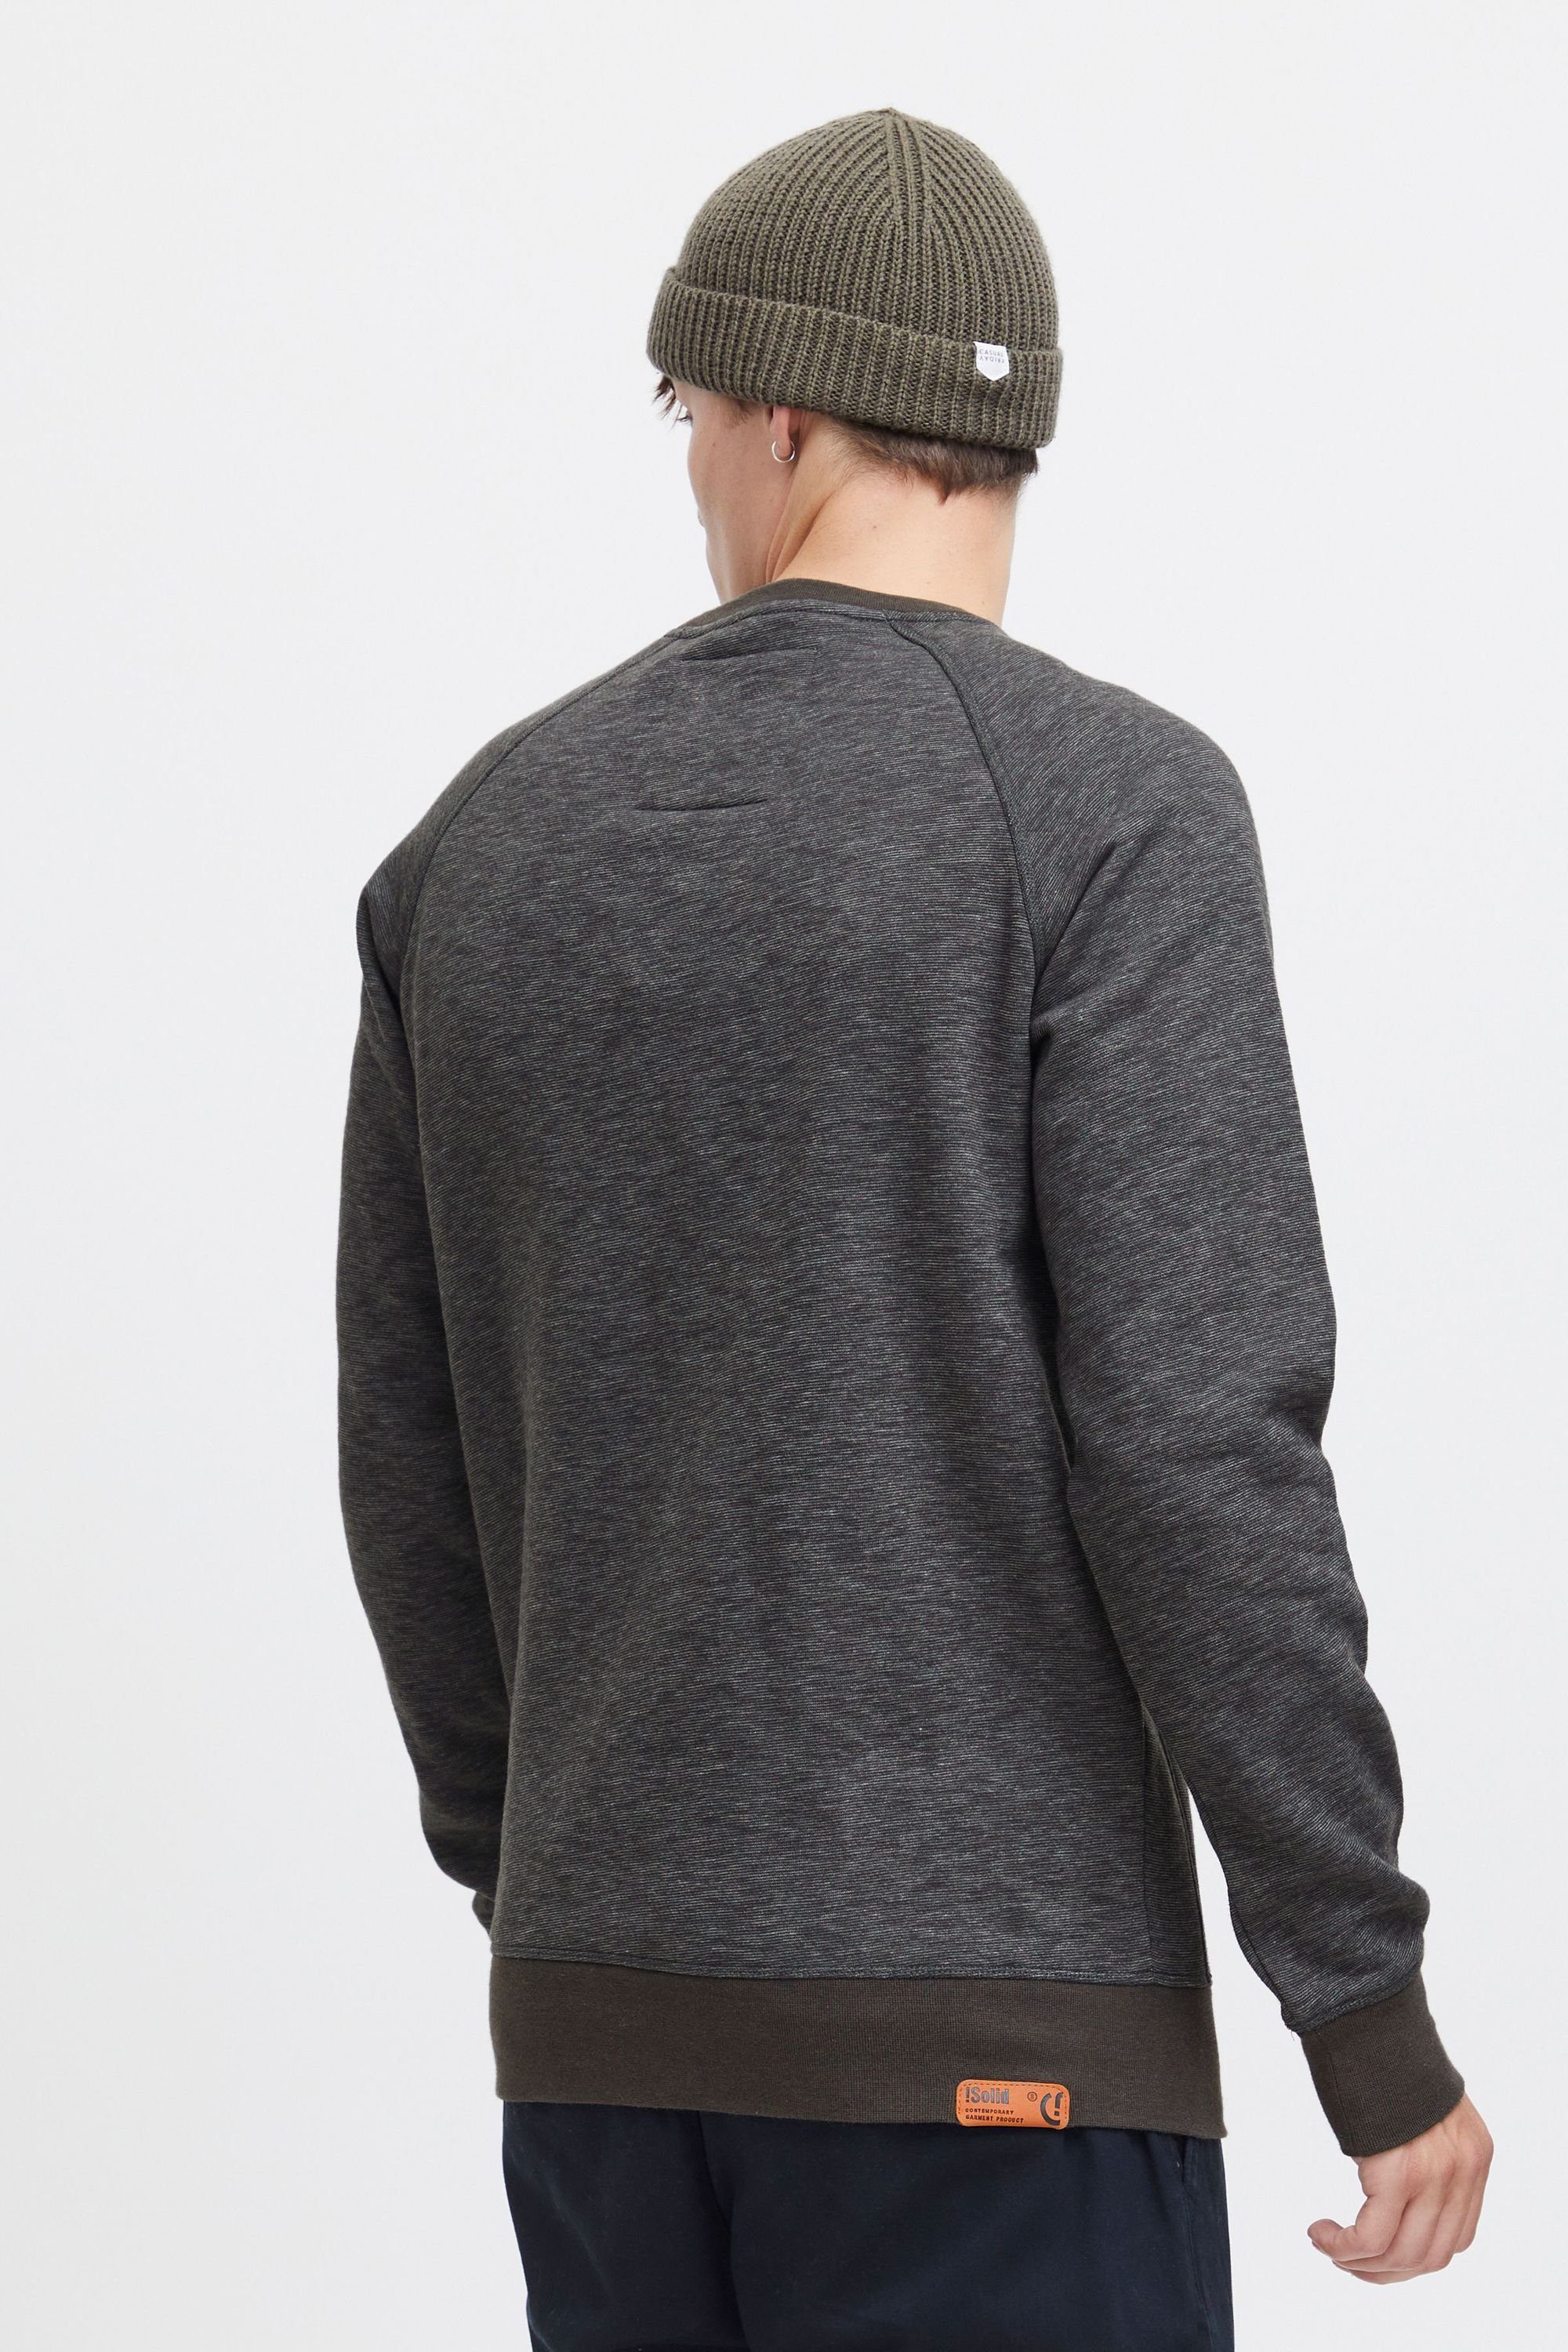 Melange mit SDVituNeck (8236) Sweatpullover Sweatshirt Ziernähten !Solid dekorativen Grey